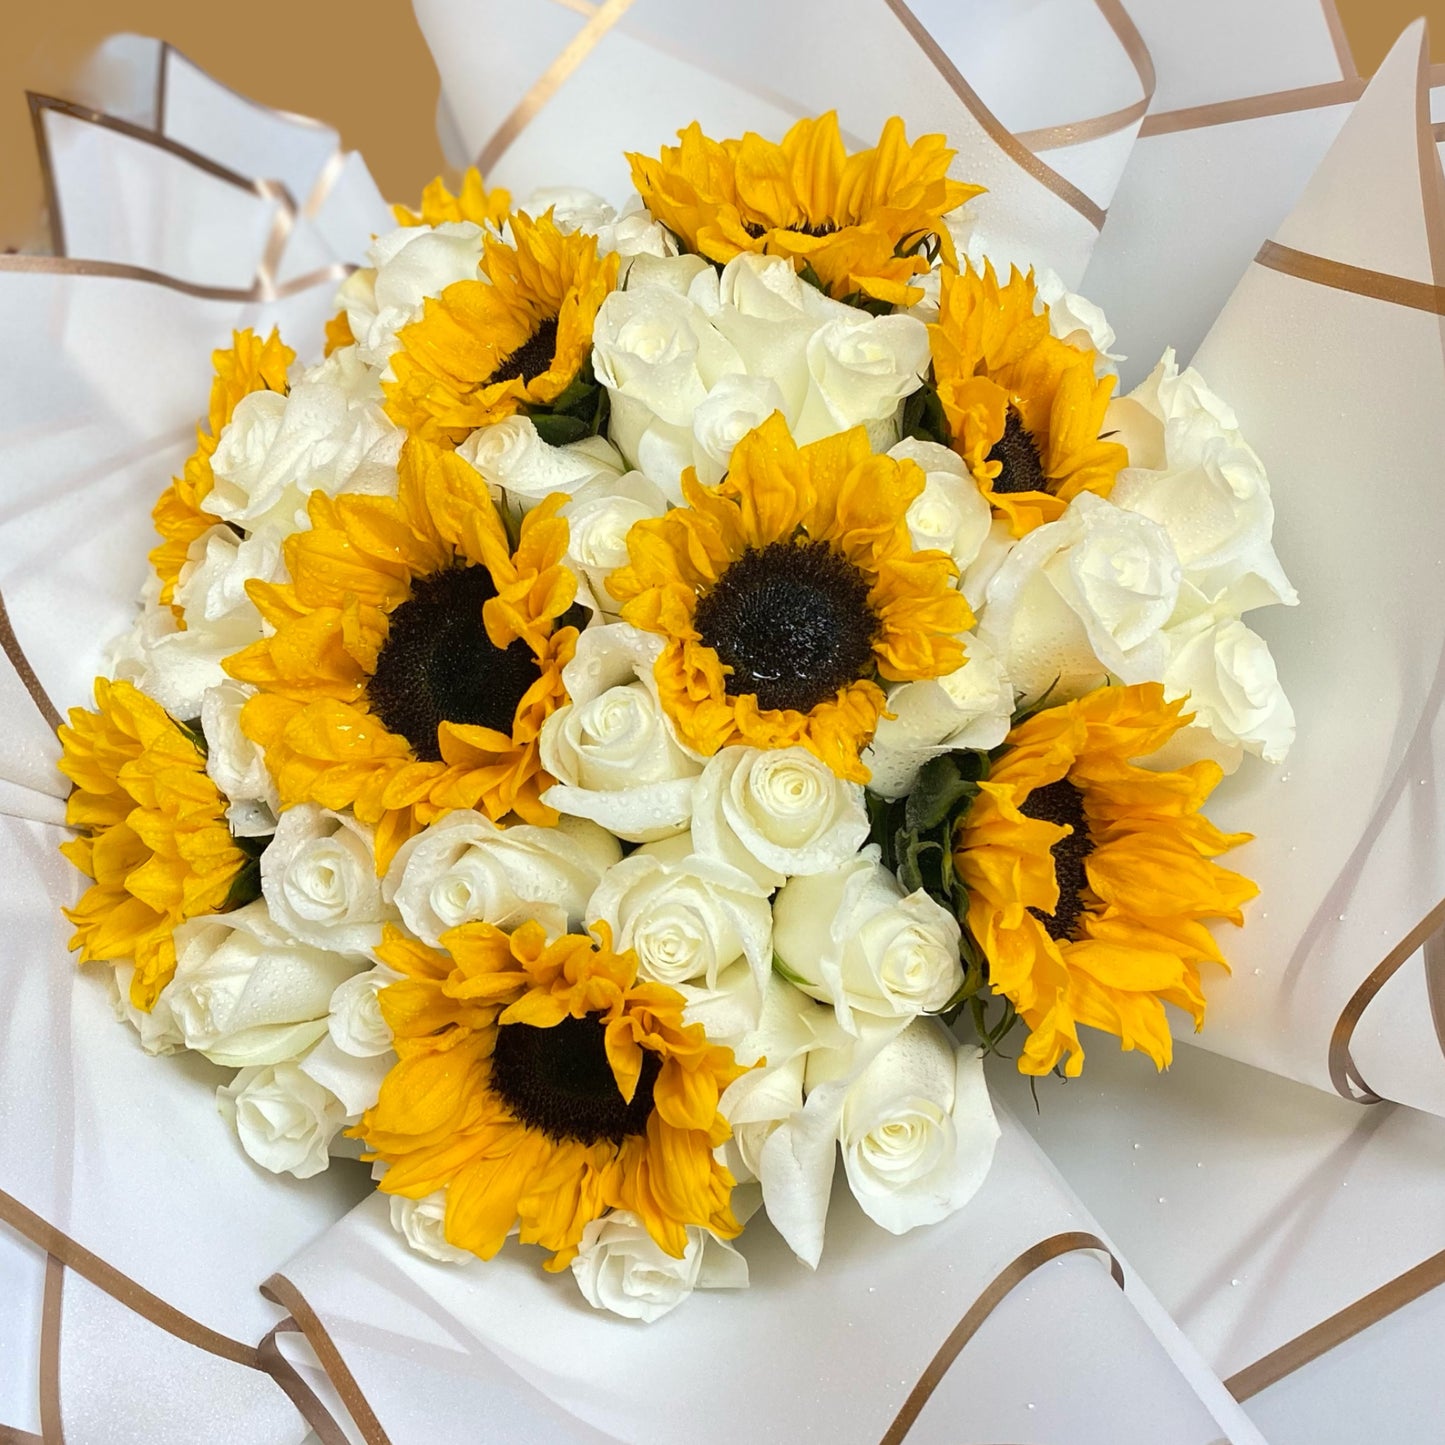 Ramo Buchon roses and sunflowers